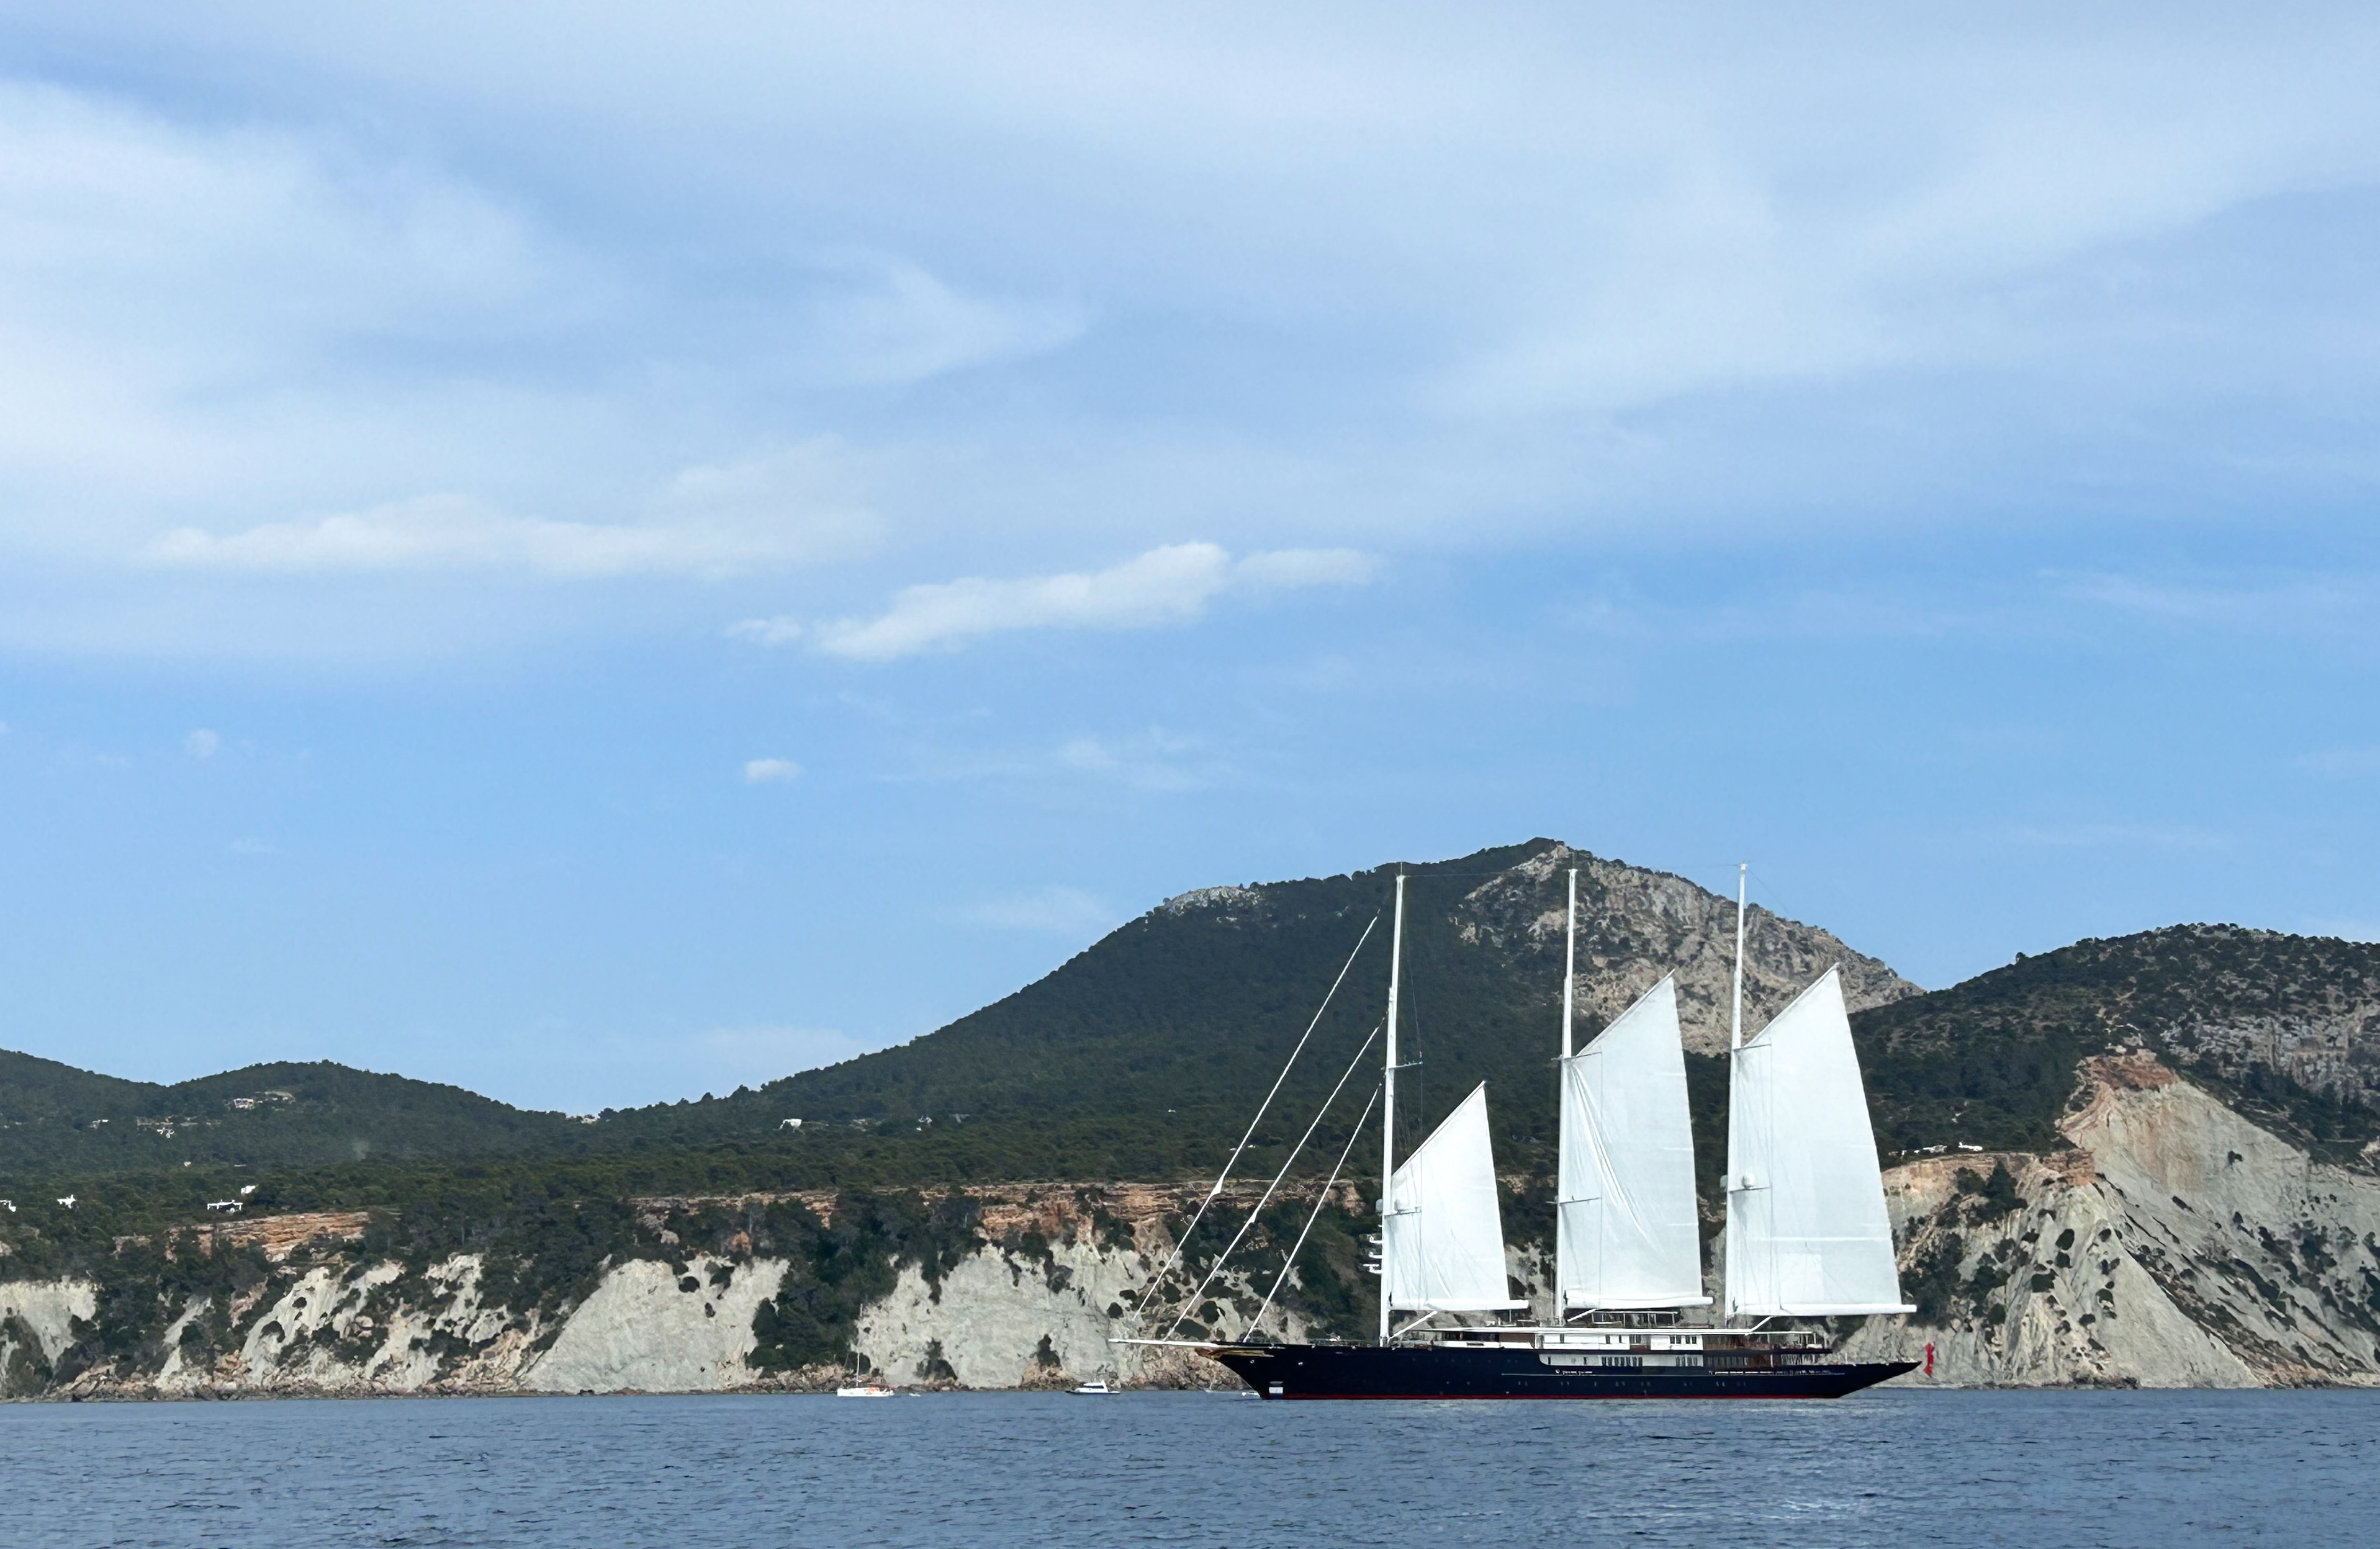 Amazon founder Jeff Bezos’ yacht Koru sails through the Mediterranean off the coast of Ibiza, in May. Photo: DPA via Getty Images